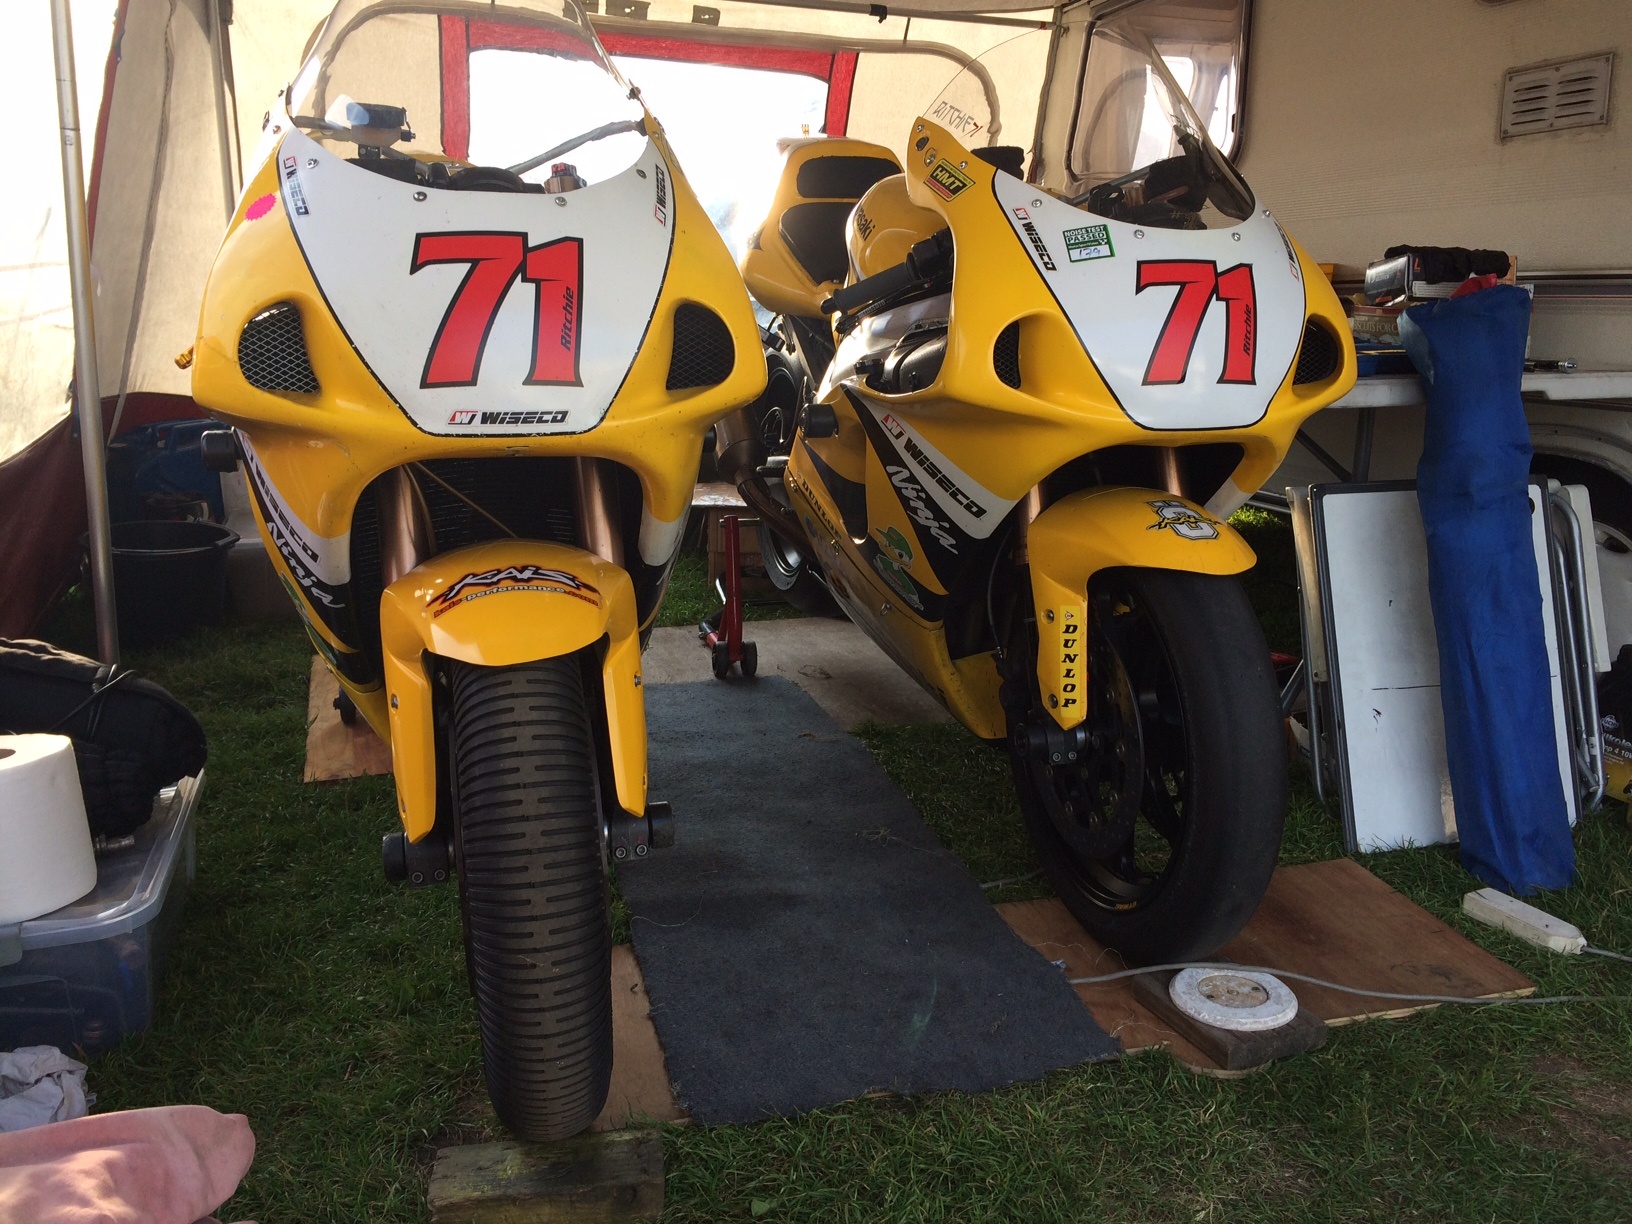 The Goldern Era of Superbikes: Ritchie Thornton's Kawasaki ZX-7R